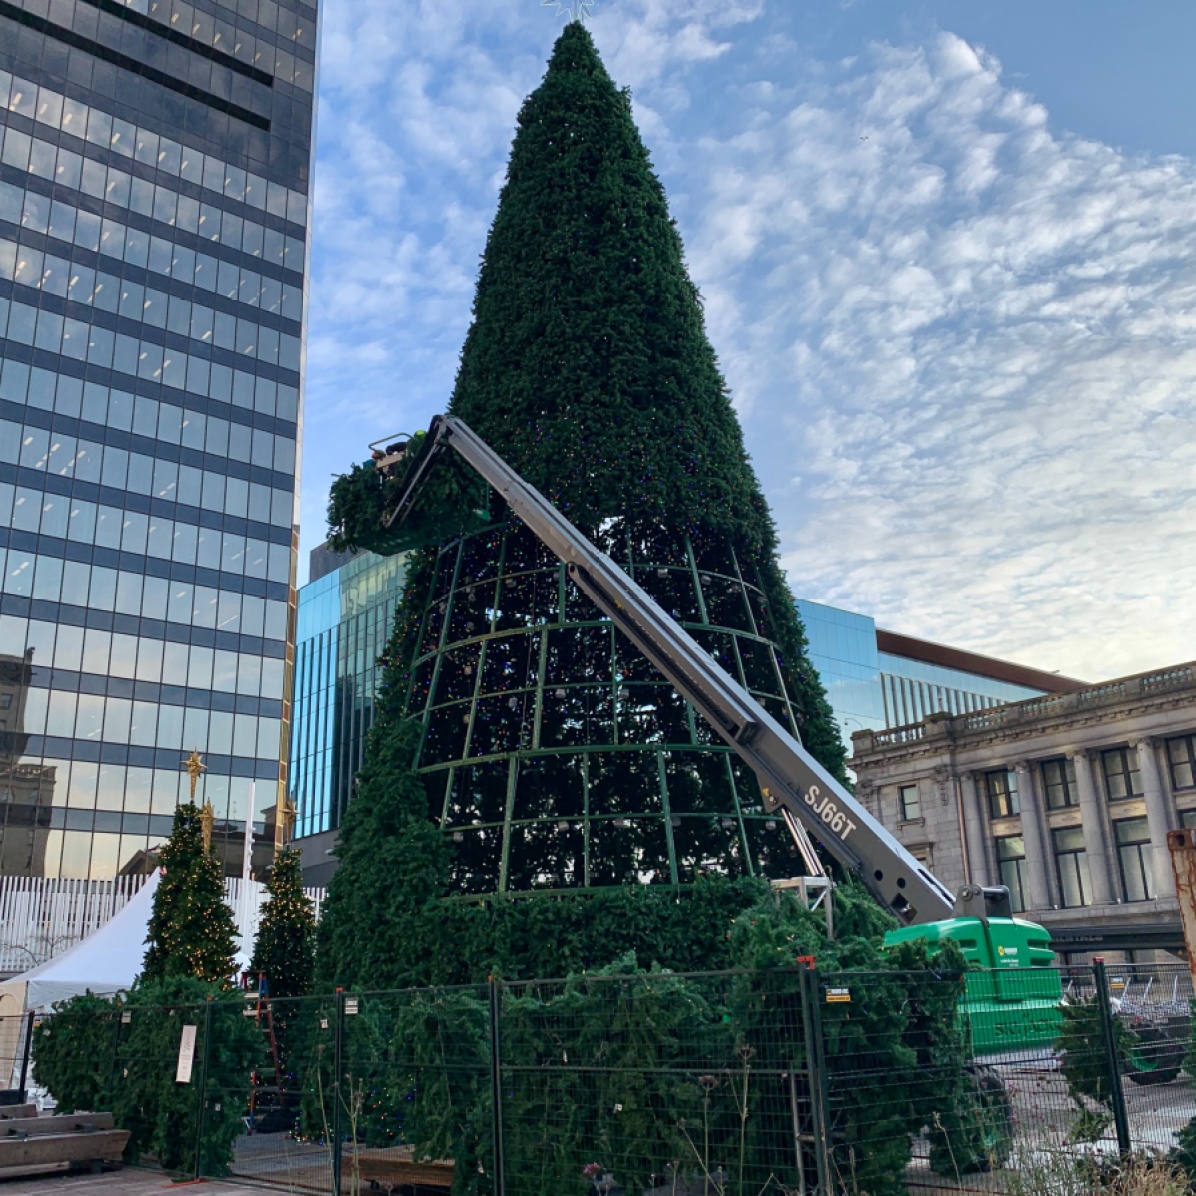 Vancouver’s Christmas Tree, Vancouver Art Gallery Plaza